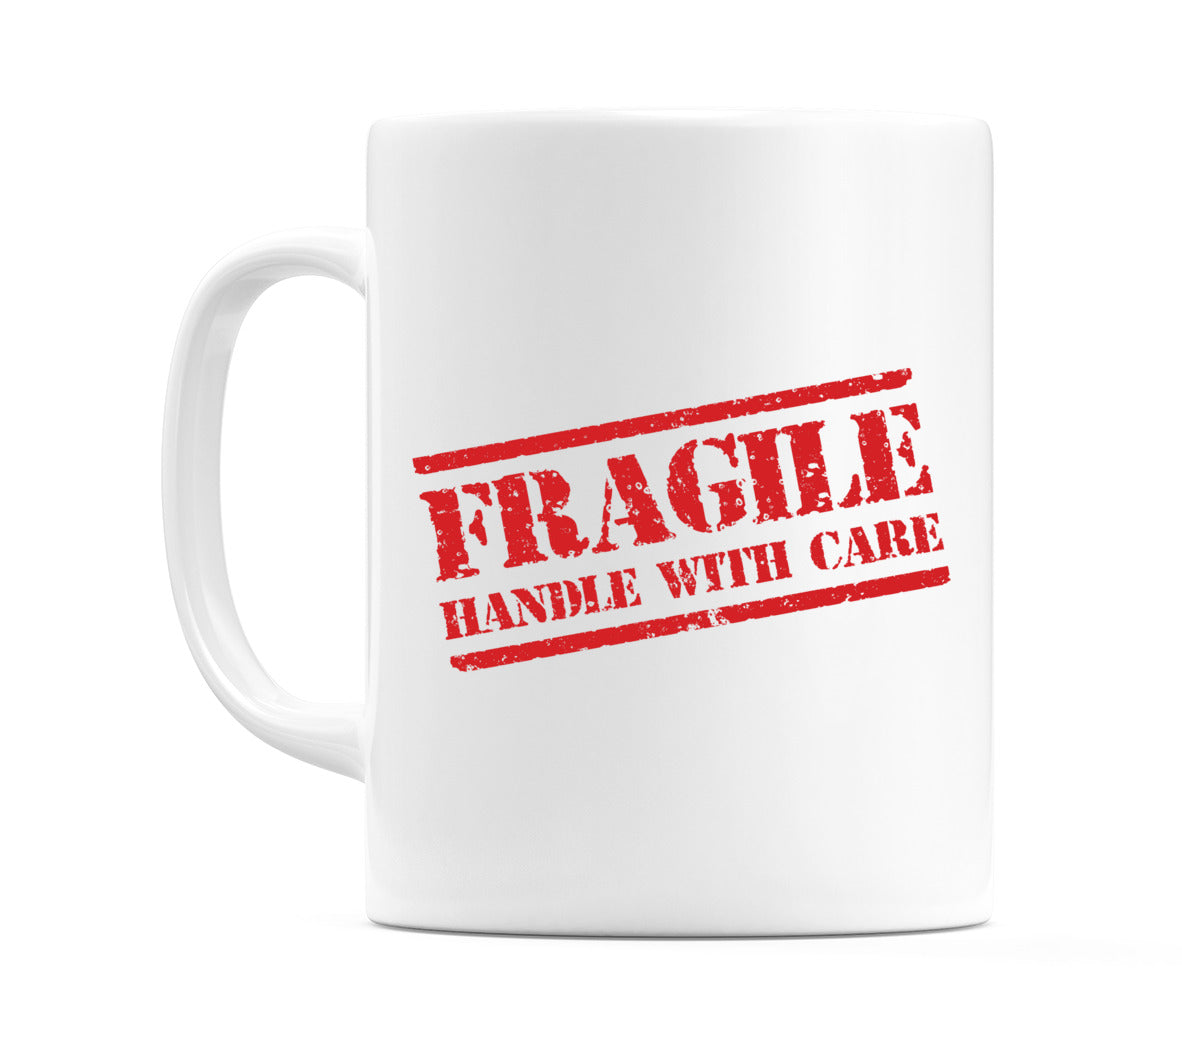 Fragile Handle With Care Mug